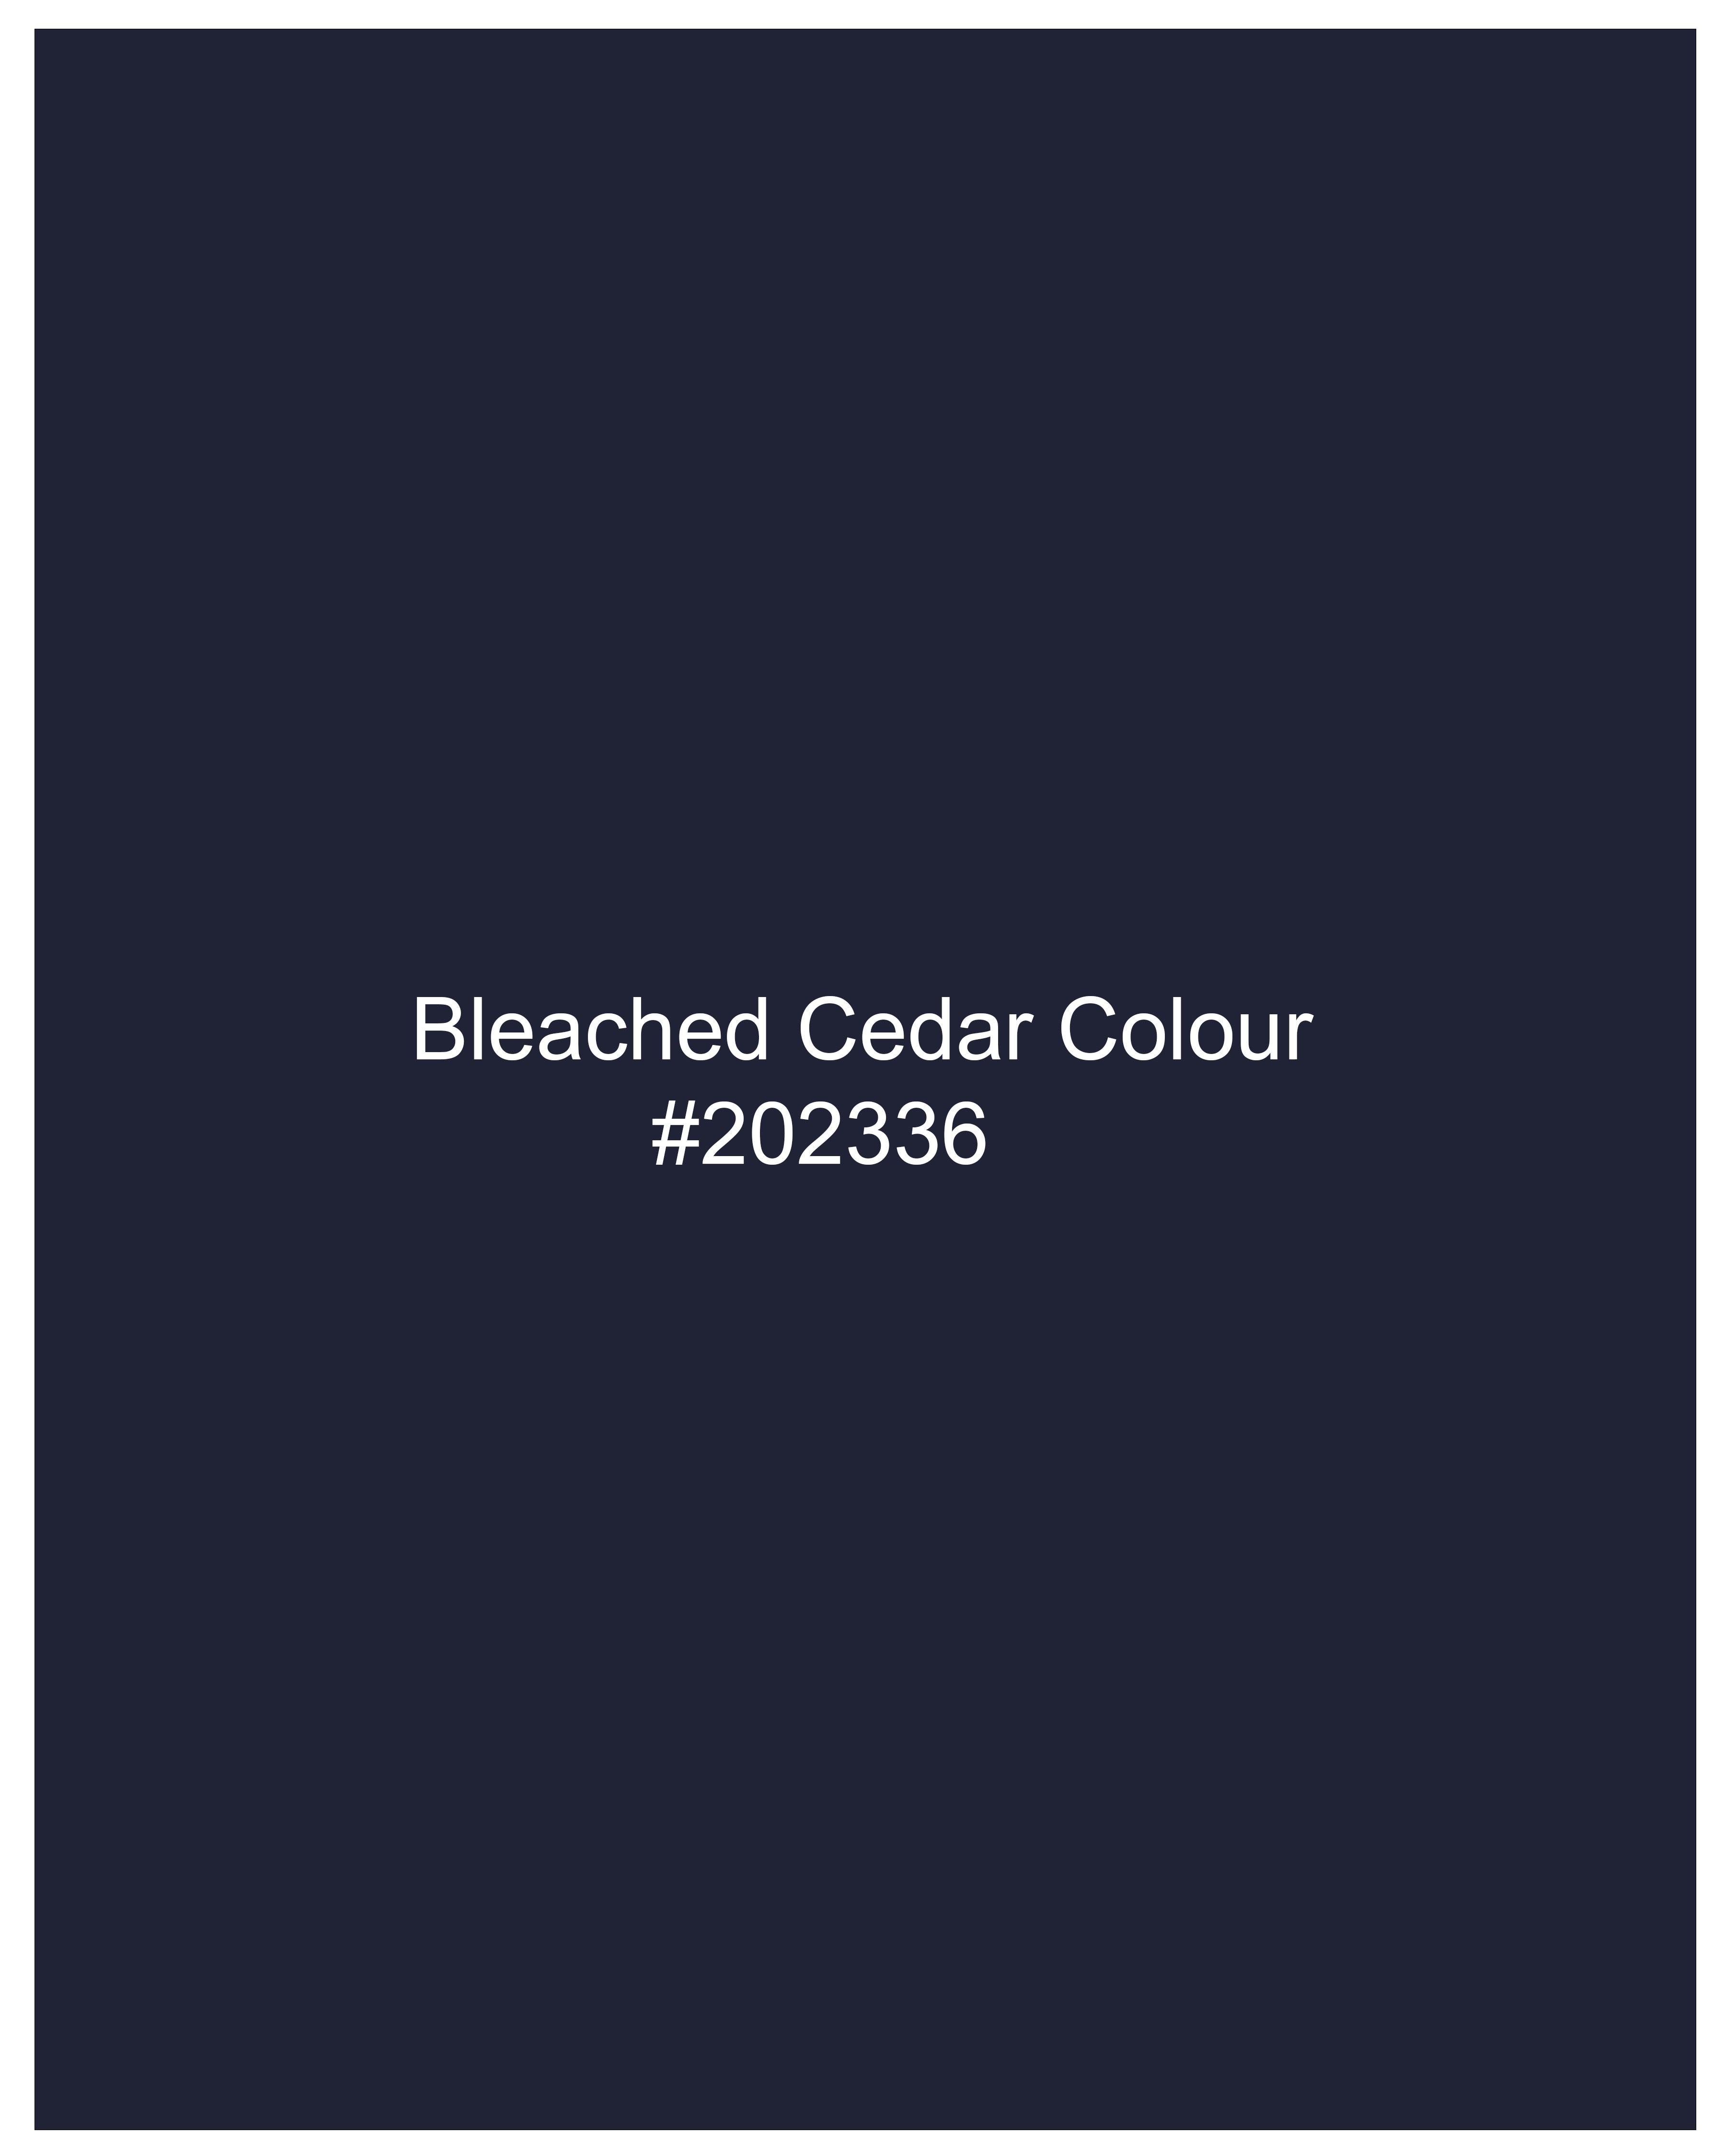 Bleached Cedar Blue Flannel Shirt 10011-BLE-38, 10011-BLE-H-38, 10011-BLE-39, 10011-BLE-H-39, 10011-BLE-40, 10011-BLE-H-40, 10011-BLE-42, 10011-BLE-H-42, 10011-BLE-44, 10011-BLE-H-44, 10011-BLE-46, 10011-BLE-H-46, 10011-BLE-48, 10011-BLE-H-48, 10011-BLE-50, 10011-BLE-H-50, 10011-BLE-52, 10011-BLE-H-52